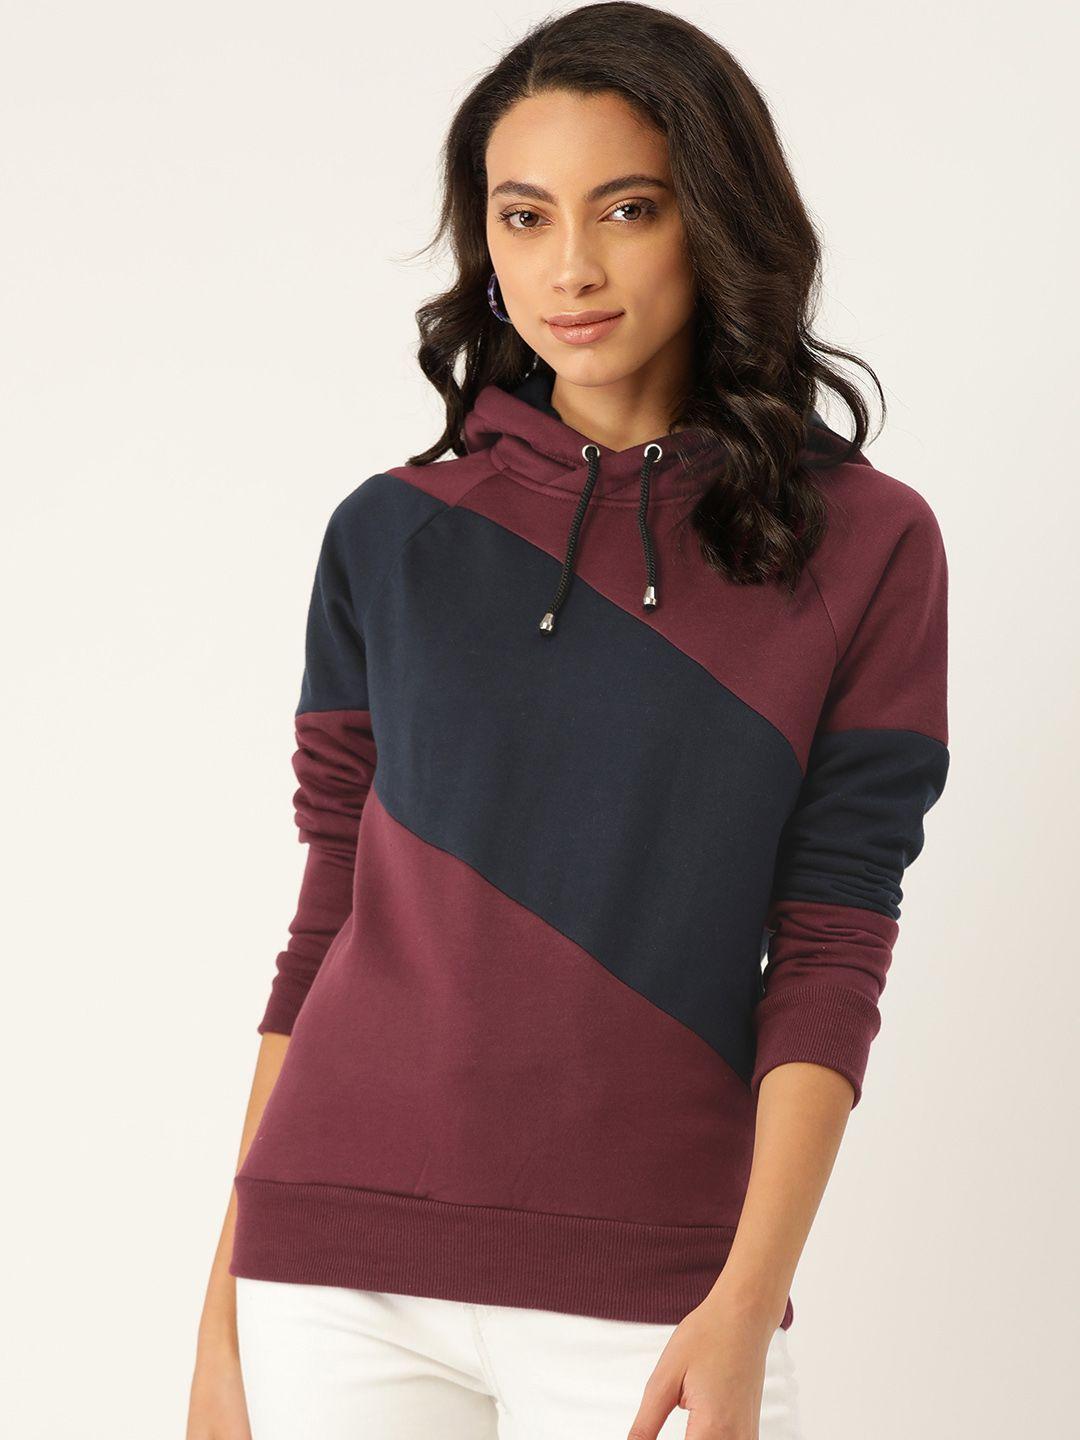 alsace lorraine paris women burgundy & navy blue colourblocked hooded sweatshirt